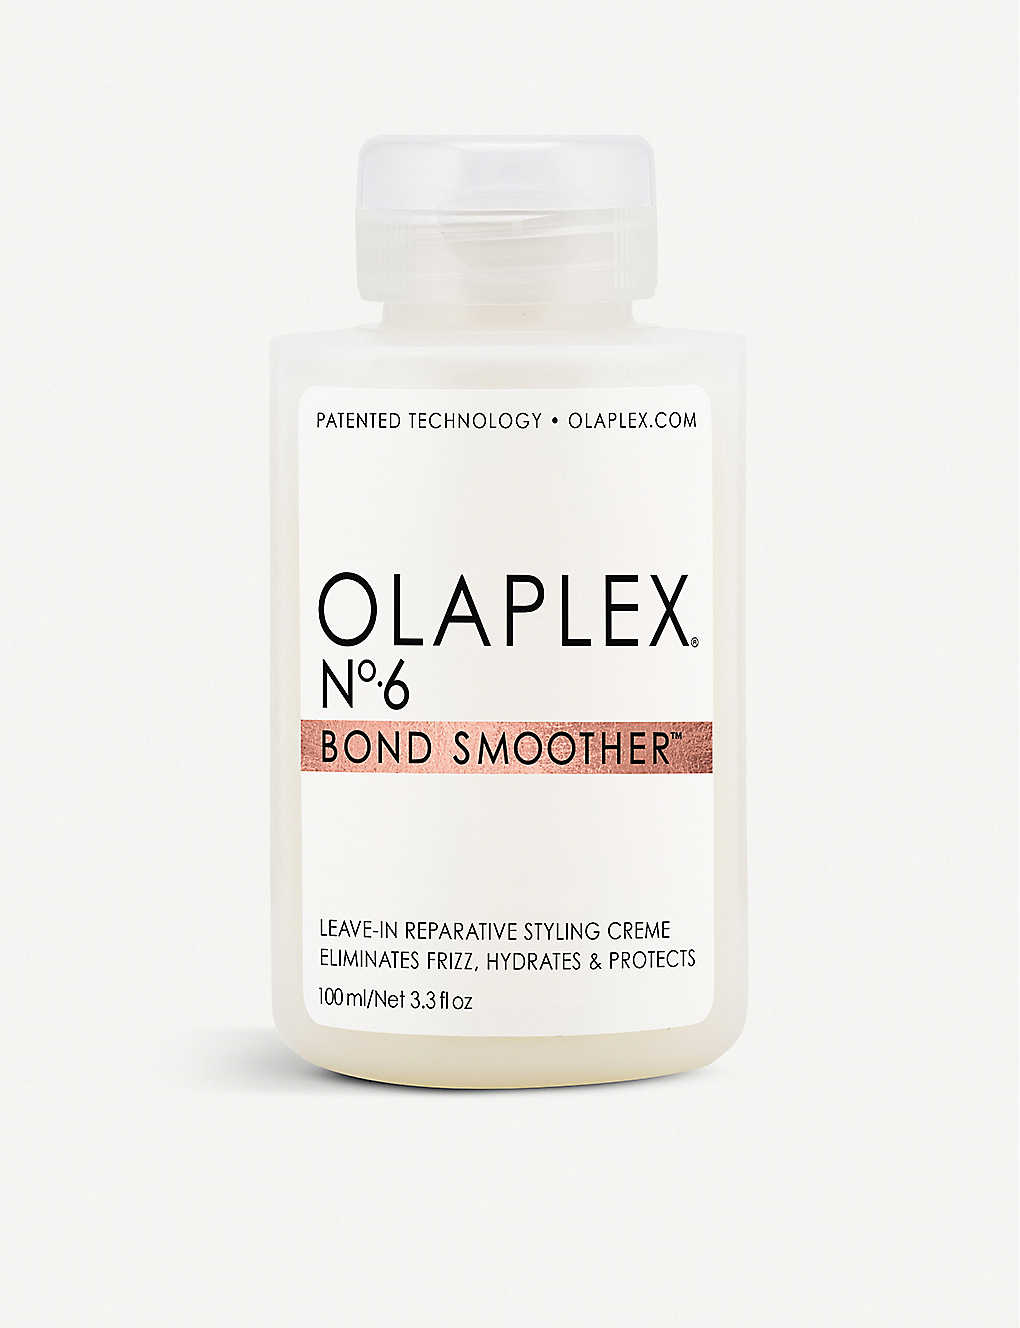 Olaplex N°6 Bond Smoother styling creme-منعم الشعر رقم 6